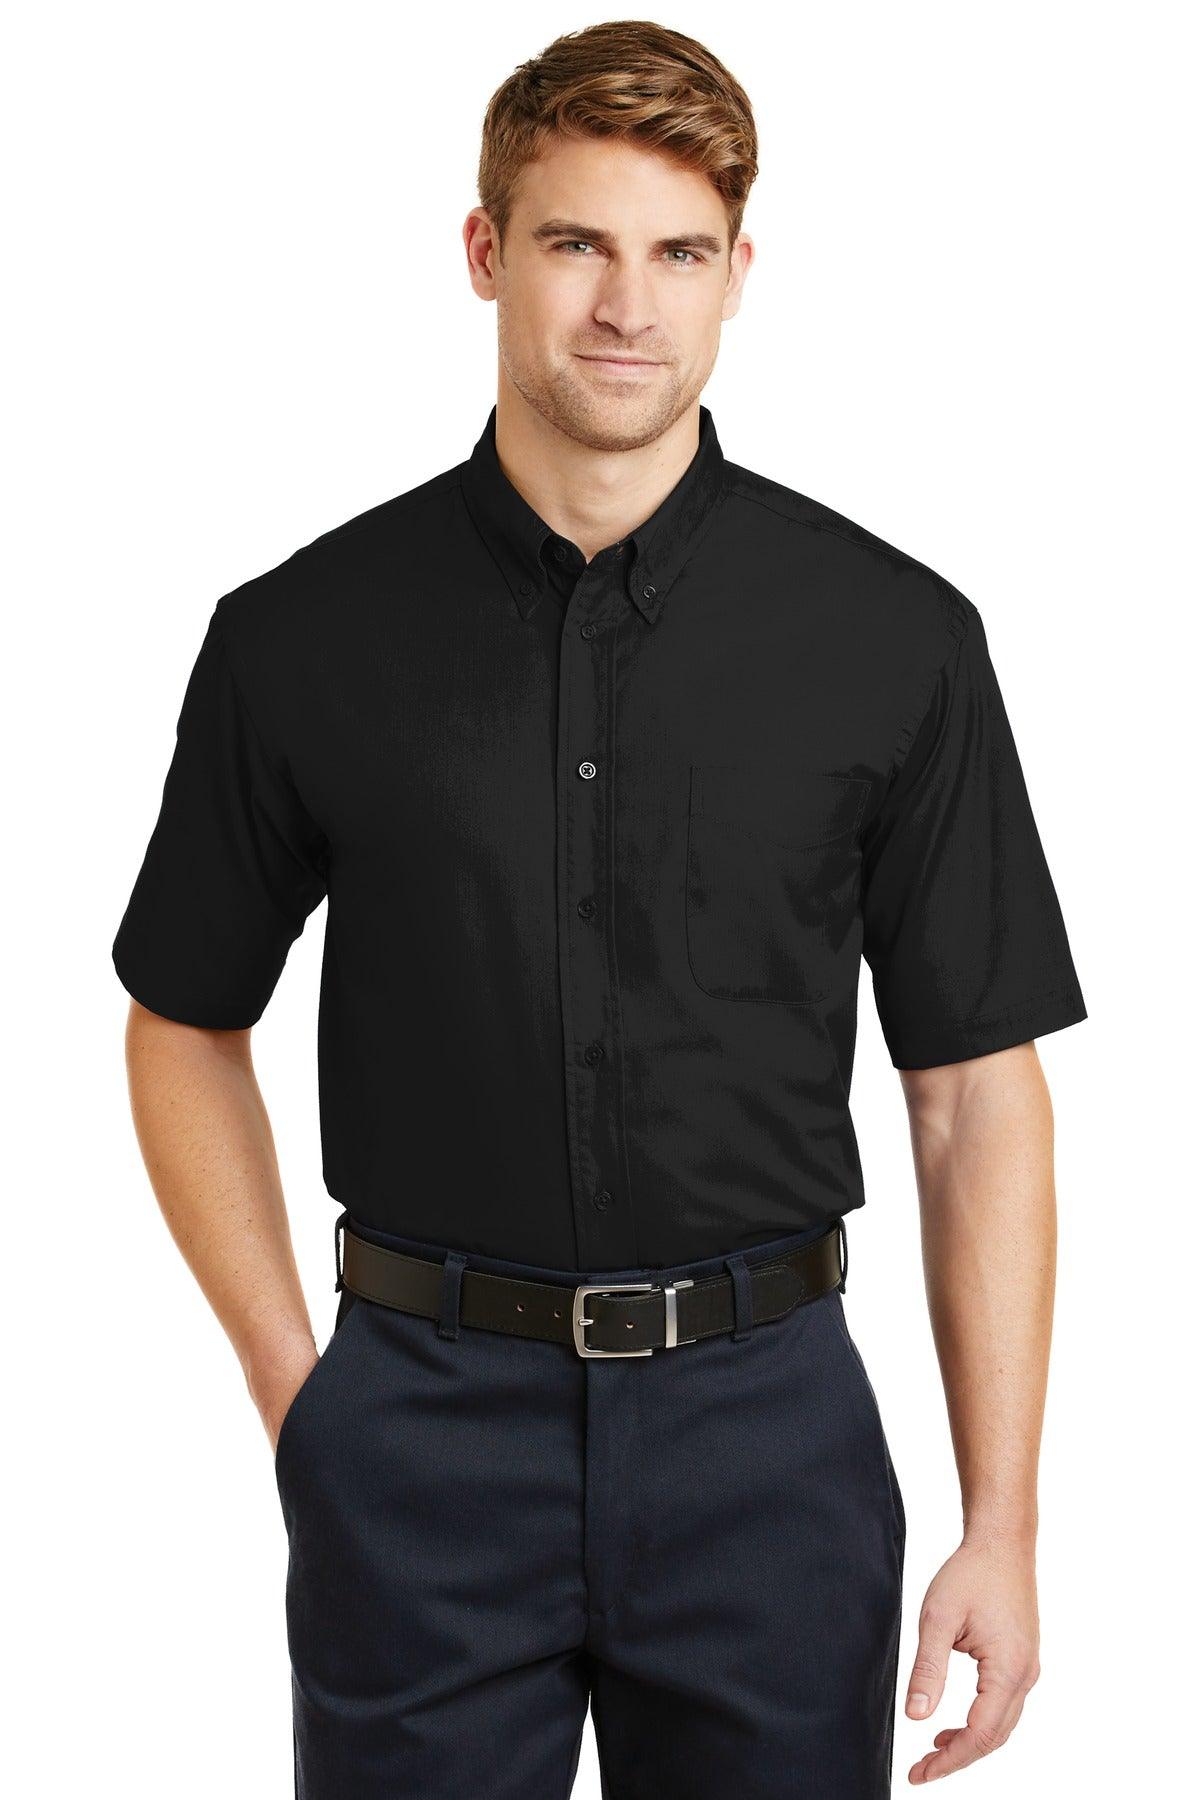 CornerStone - Short Sleeve SuperPro Twill Shirt. SP18 - Dresses Max